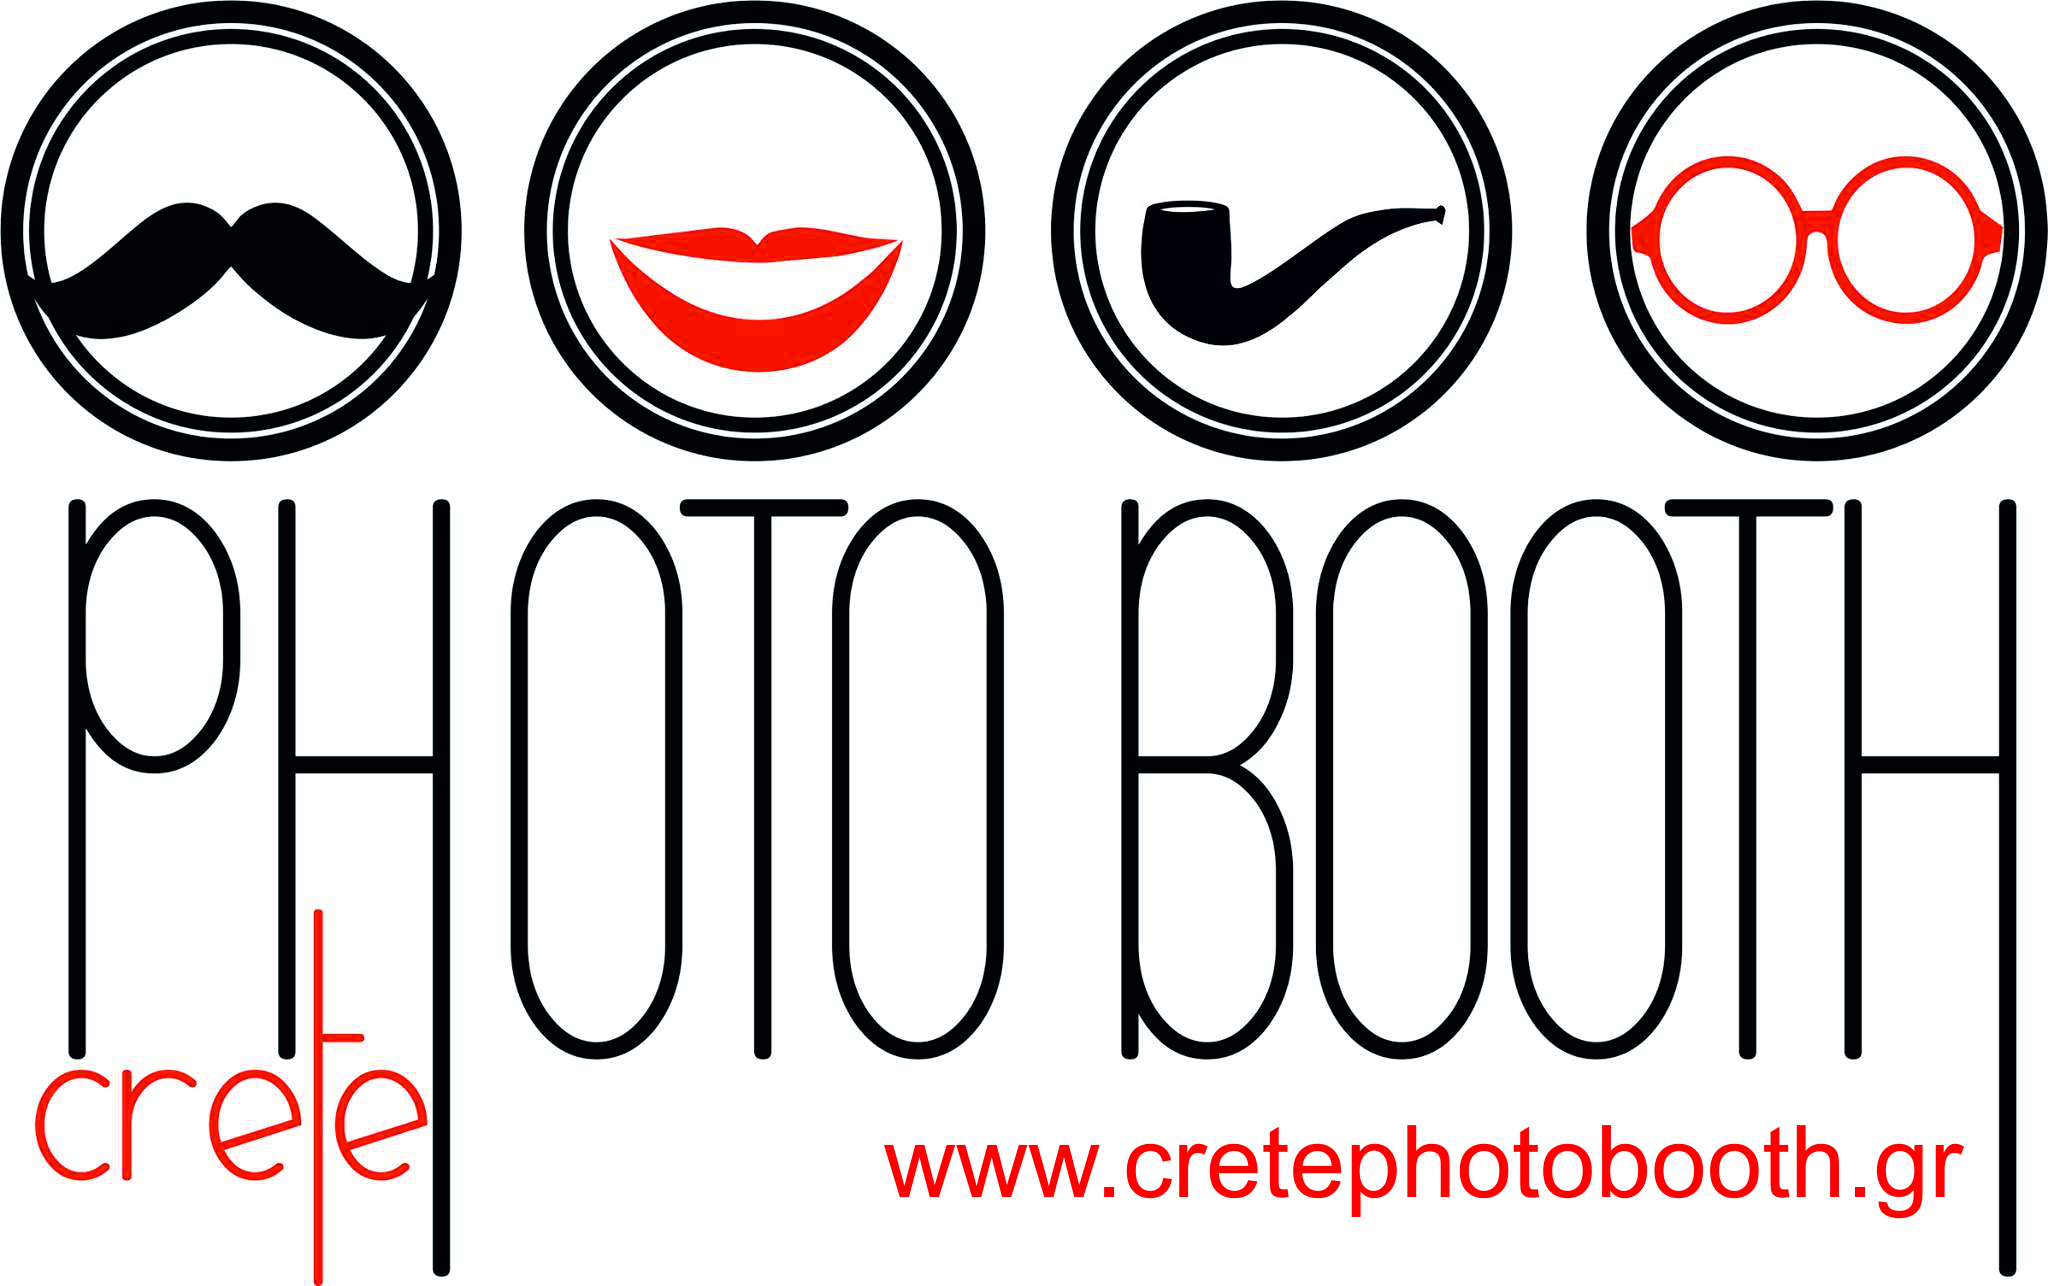 www.cretephotobooth.gr - ΙΩΑΝΝΗΣ ΙΟΡΔΑΝΙΔΗΣ, Photobooth